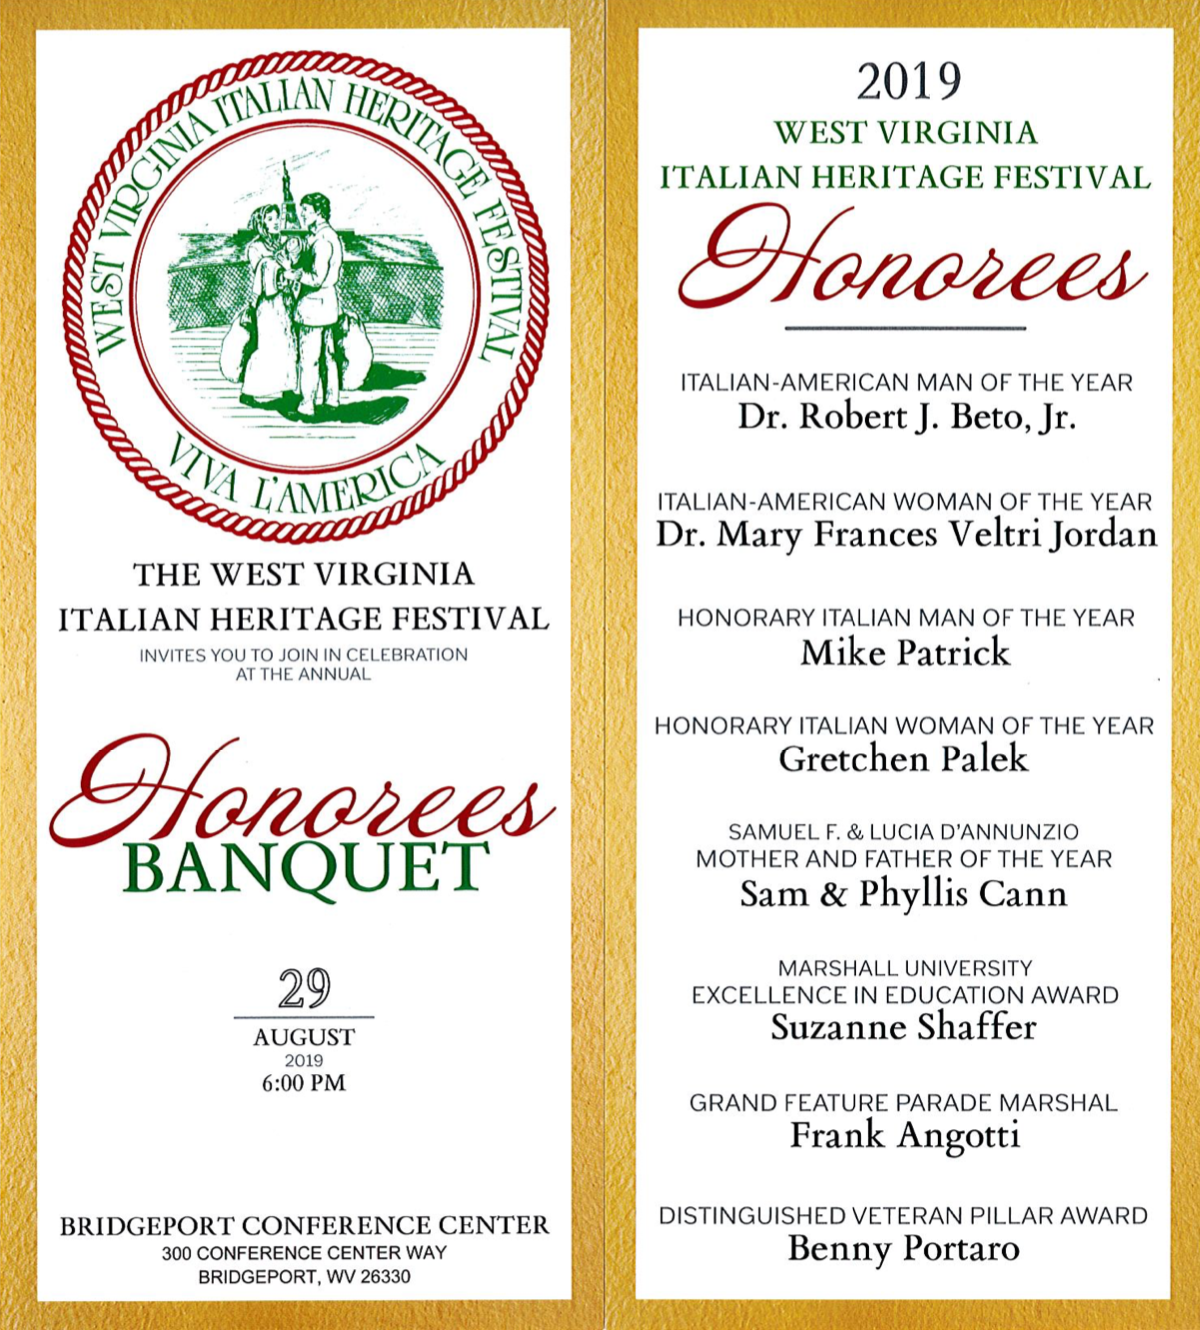 41st Annual West Virginia Italian Heritage Festival